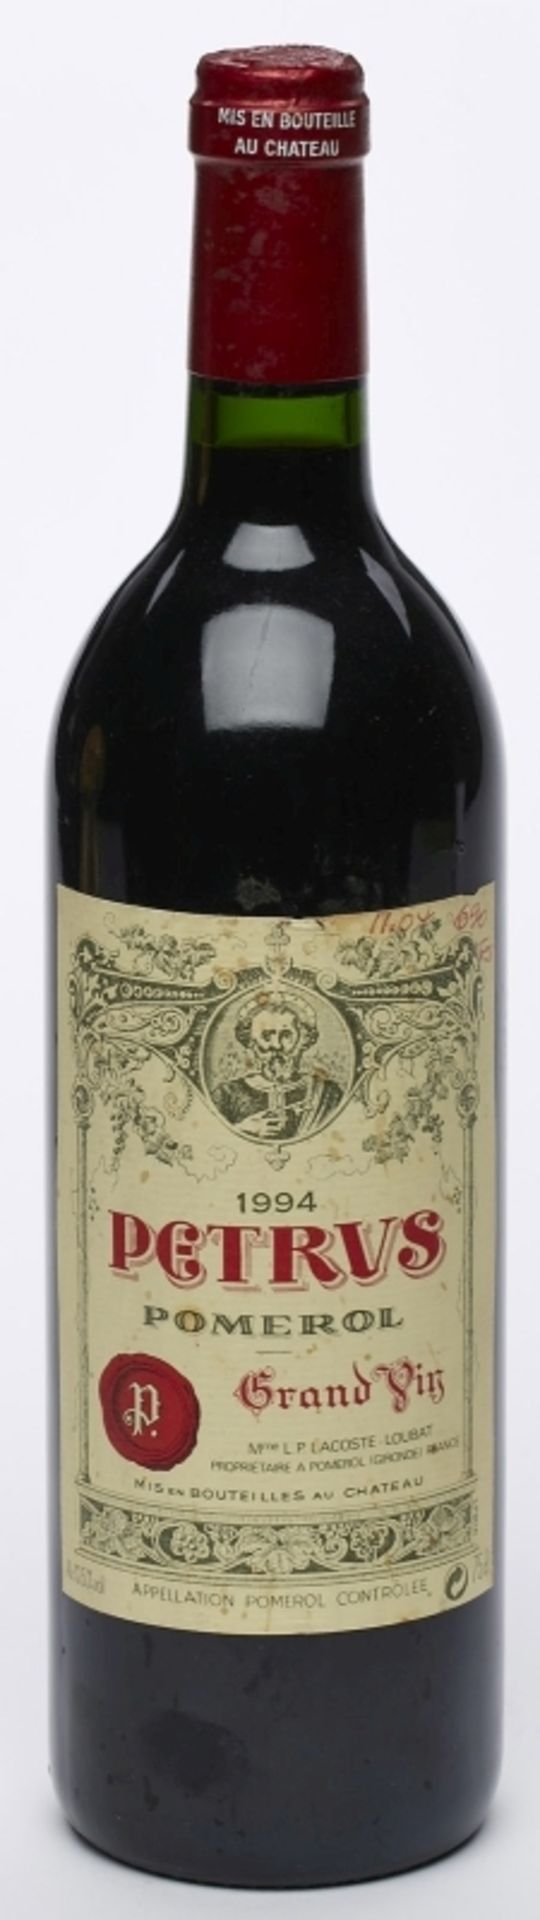 Flasche Rotwei "Petrus Pomerol Grand Vin", Jahrgang 1994 - Bild 2 aus 3